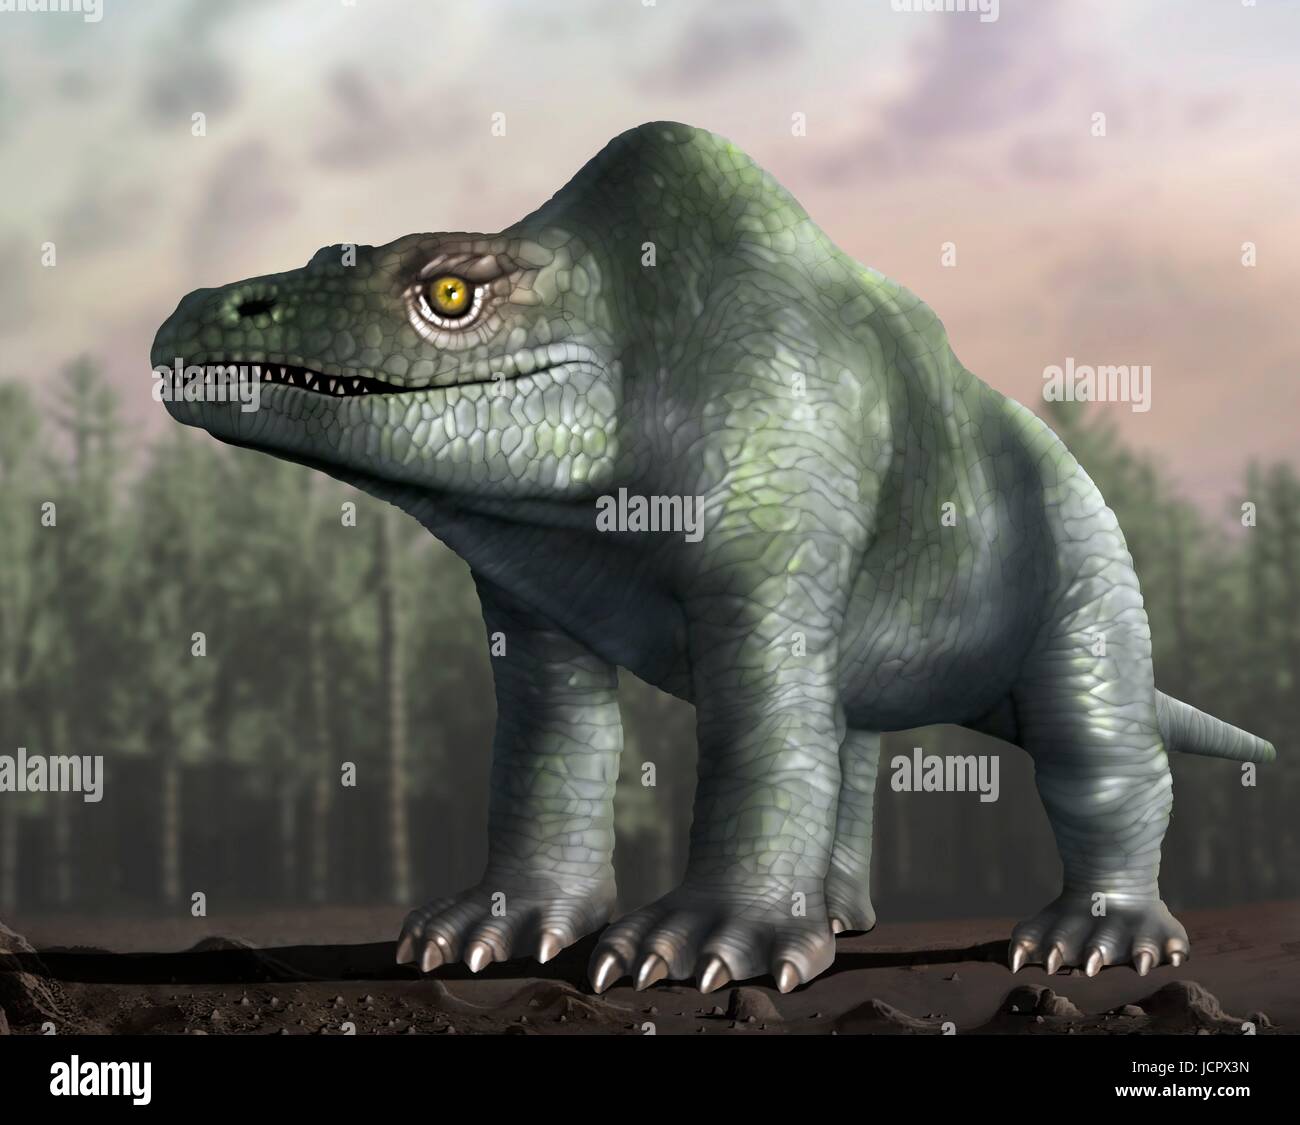 Patas de dinosaurio fotografías e imágenes de alta resolución - Alamy